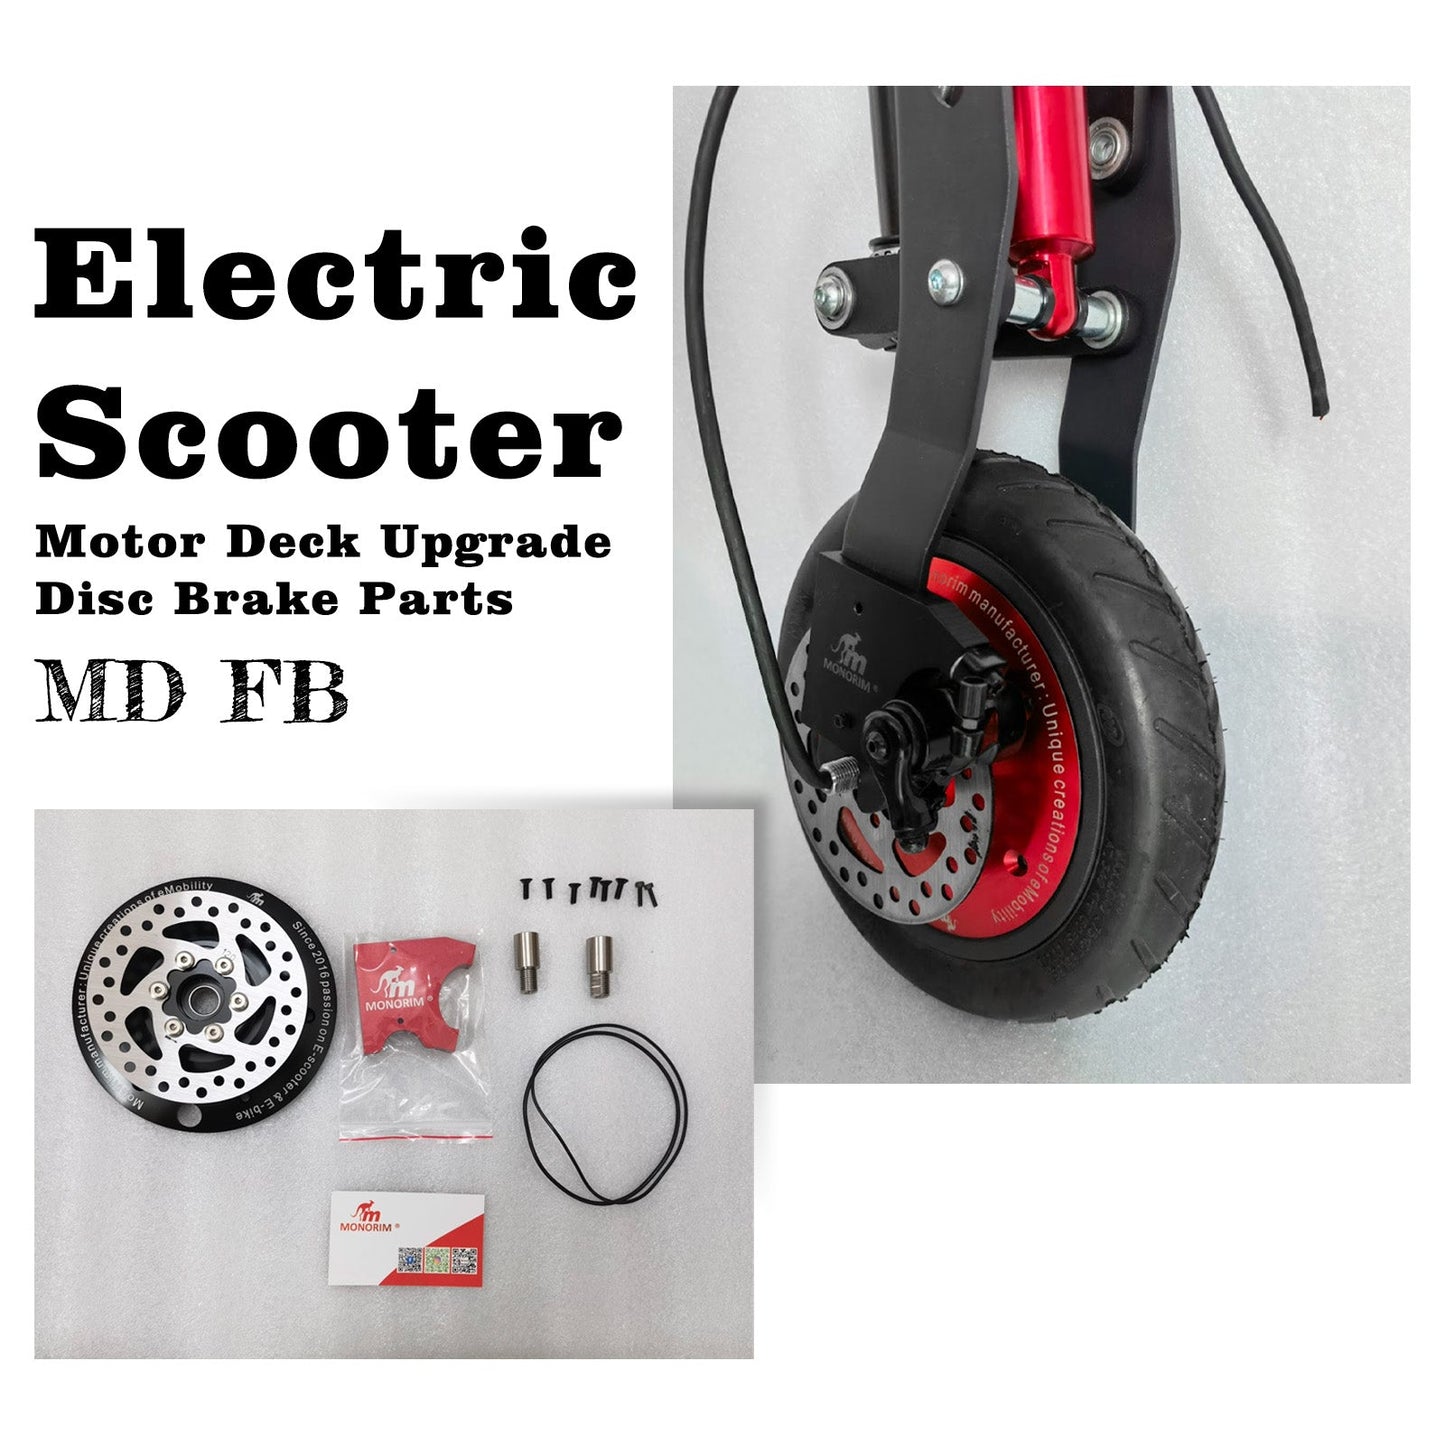 Monorim MD FB Motor Deck Upgrade Disc Brake Parts for Hiboy s2 pro Scooter, 120/140mm Disc for Front Motor